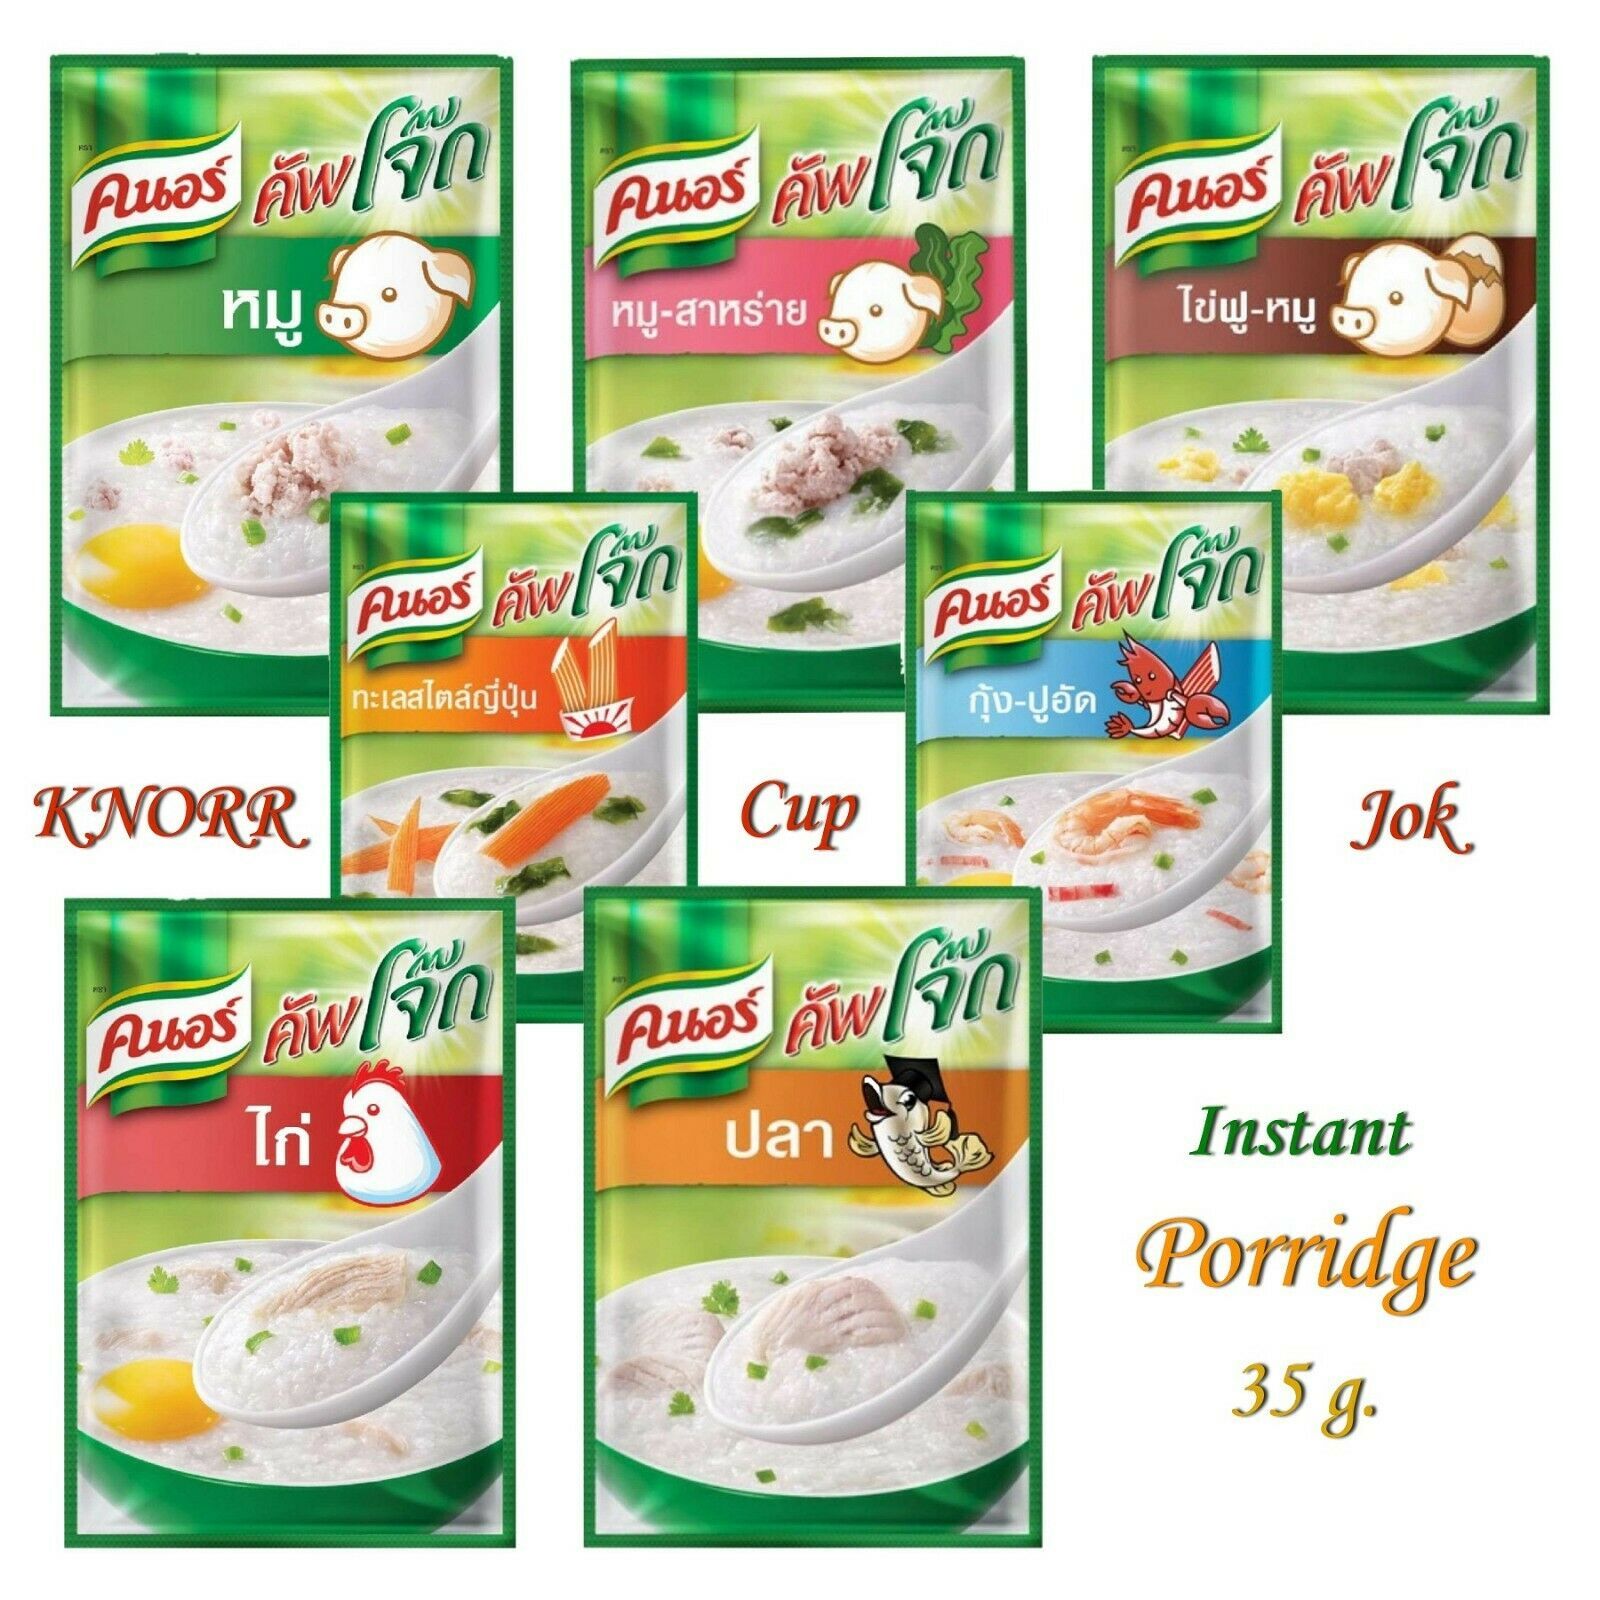 Knorr Instant Porridge Congee Thai Jasmine Rice Variety Flavor Delicious Breakfa